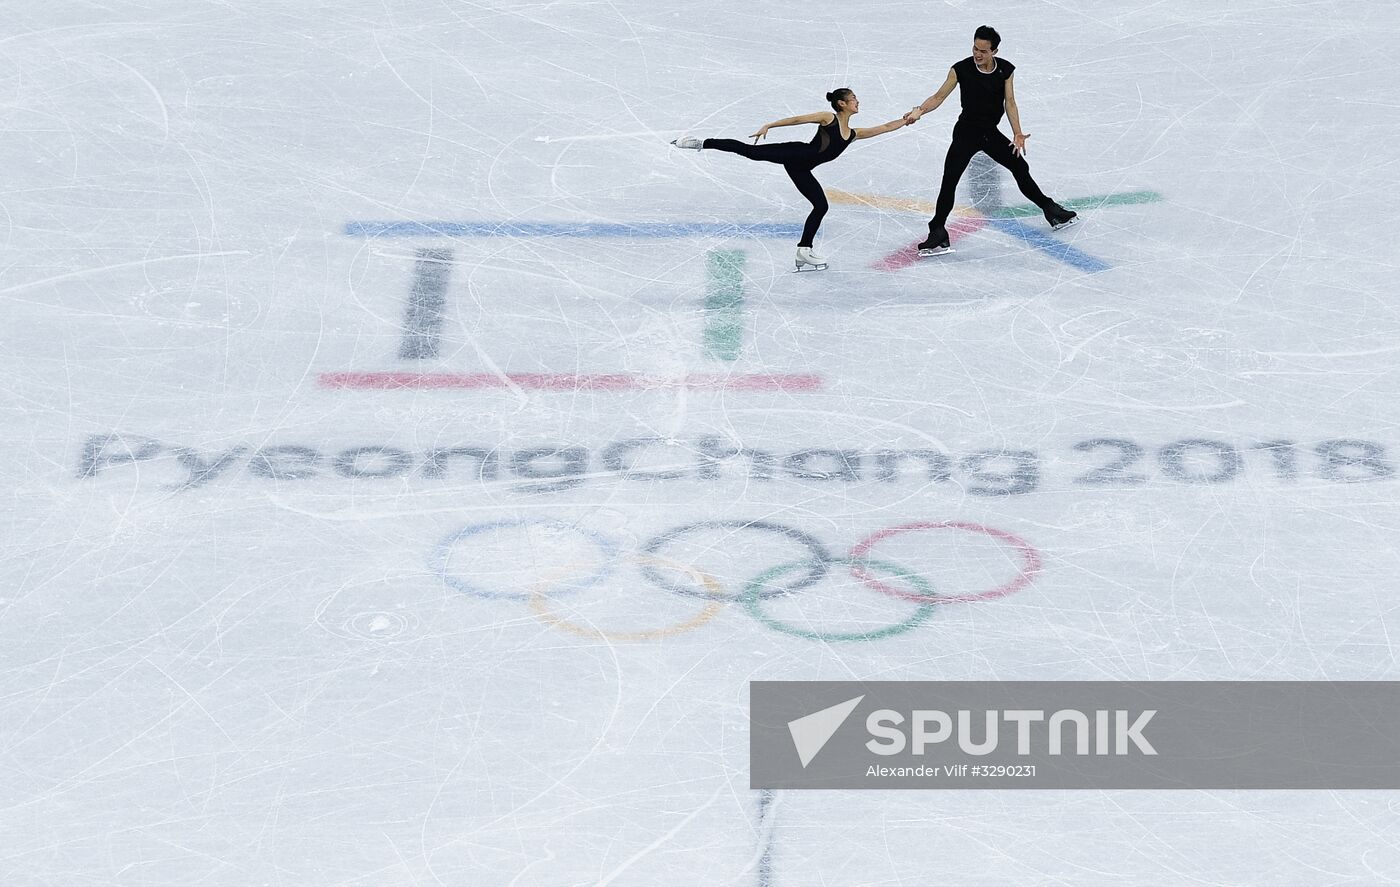 2018 Winter Olympics. Figure skating. Pairs. Training sessions